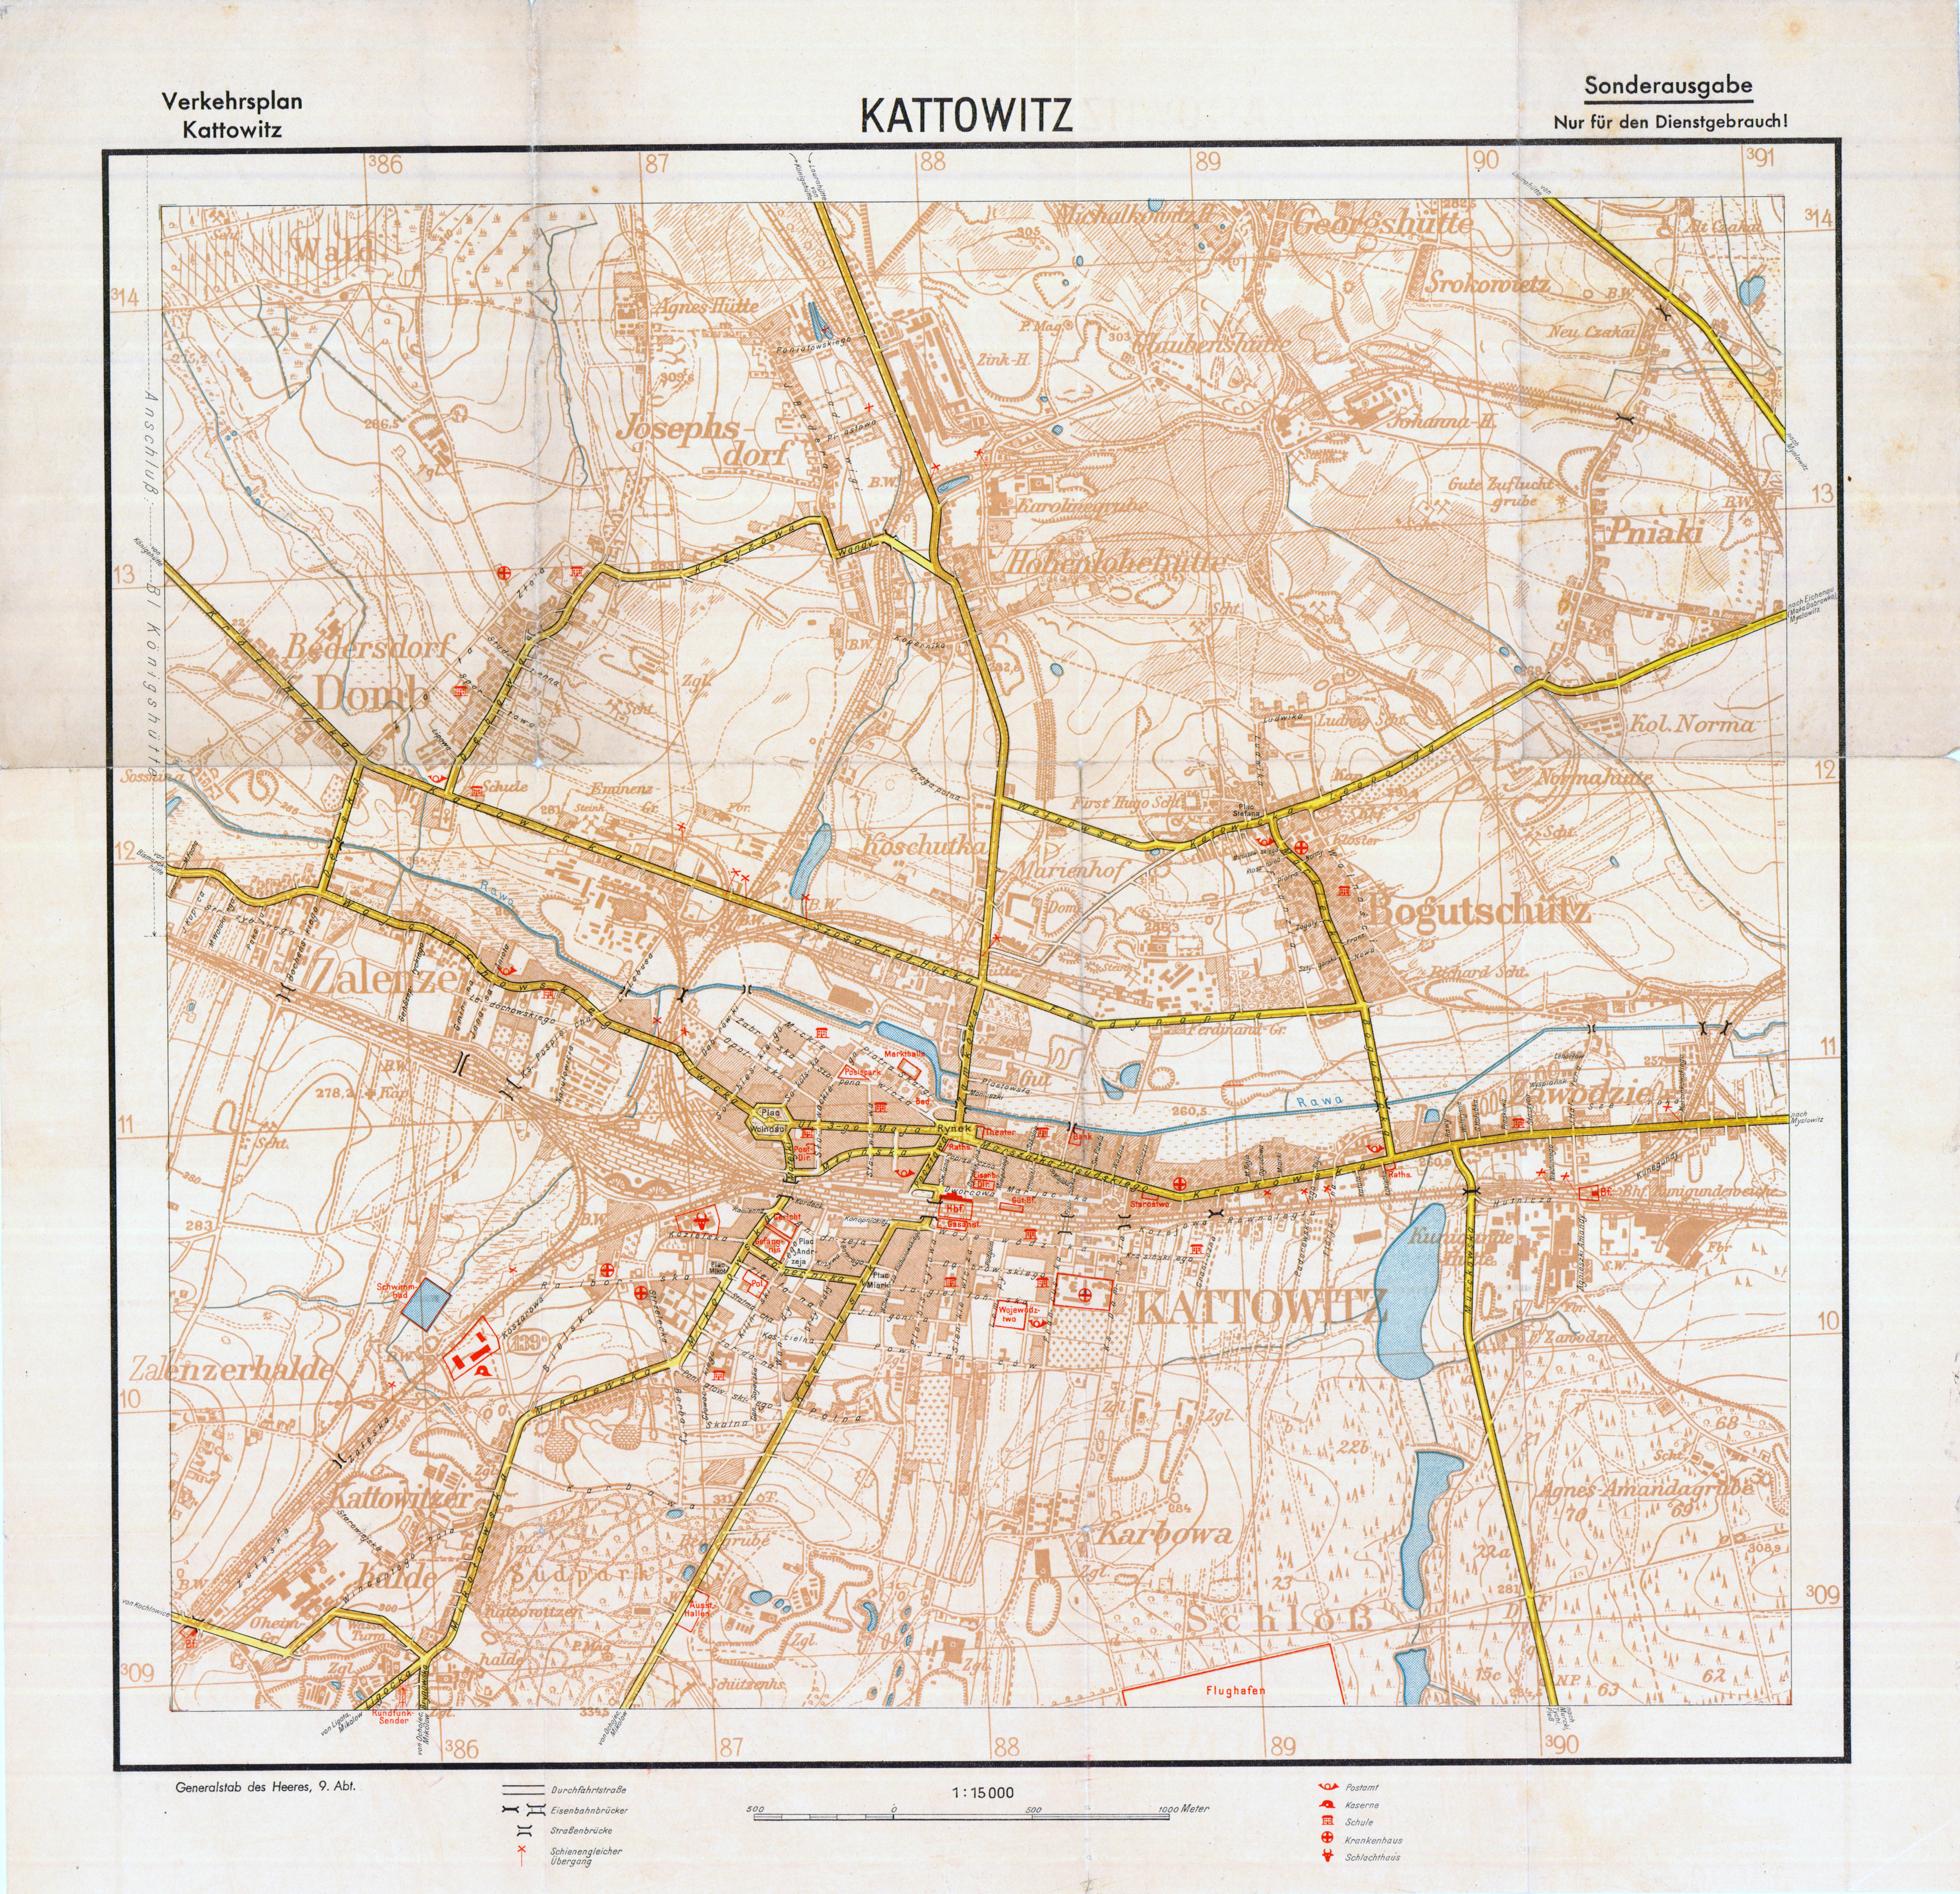 mapy - Katowice_Verkehrsplan_300dpi_1939.jpg